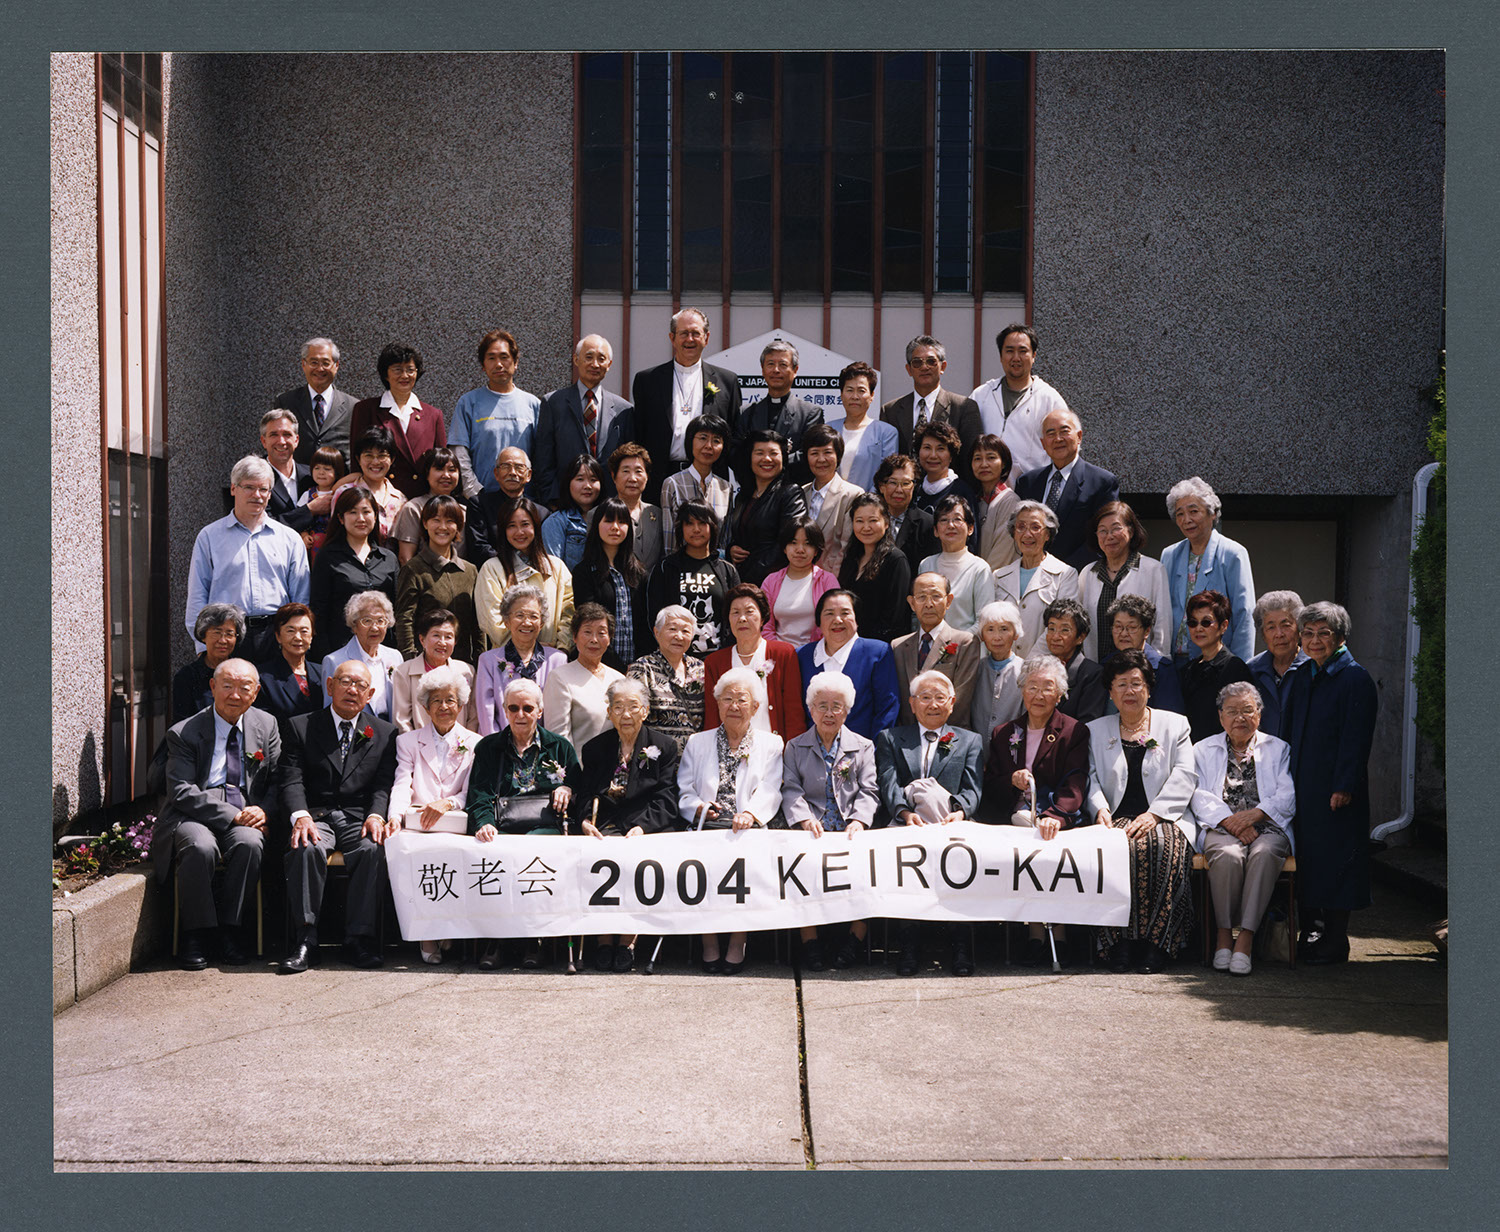 Group portrait of congregation, seniors' day